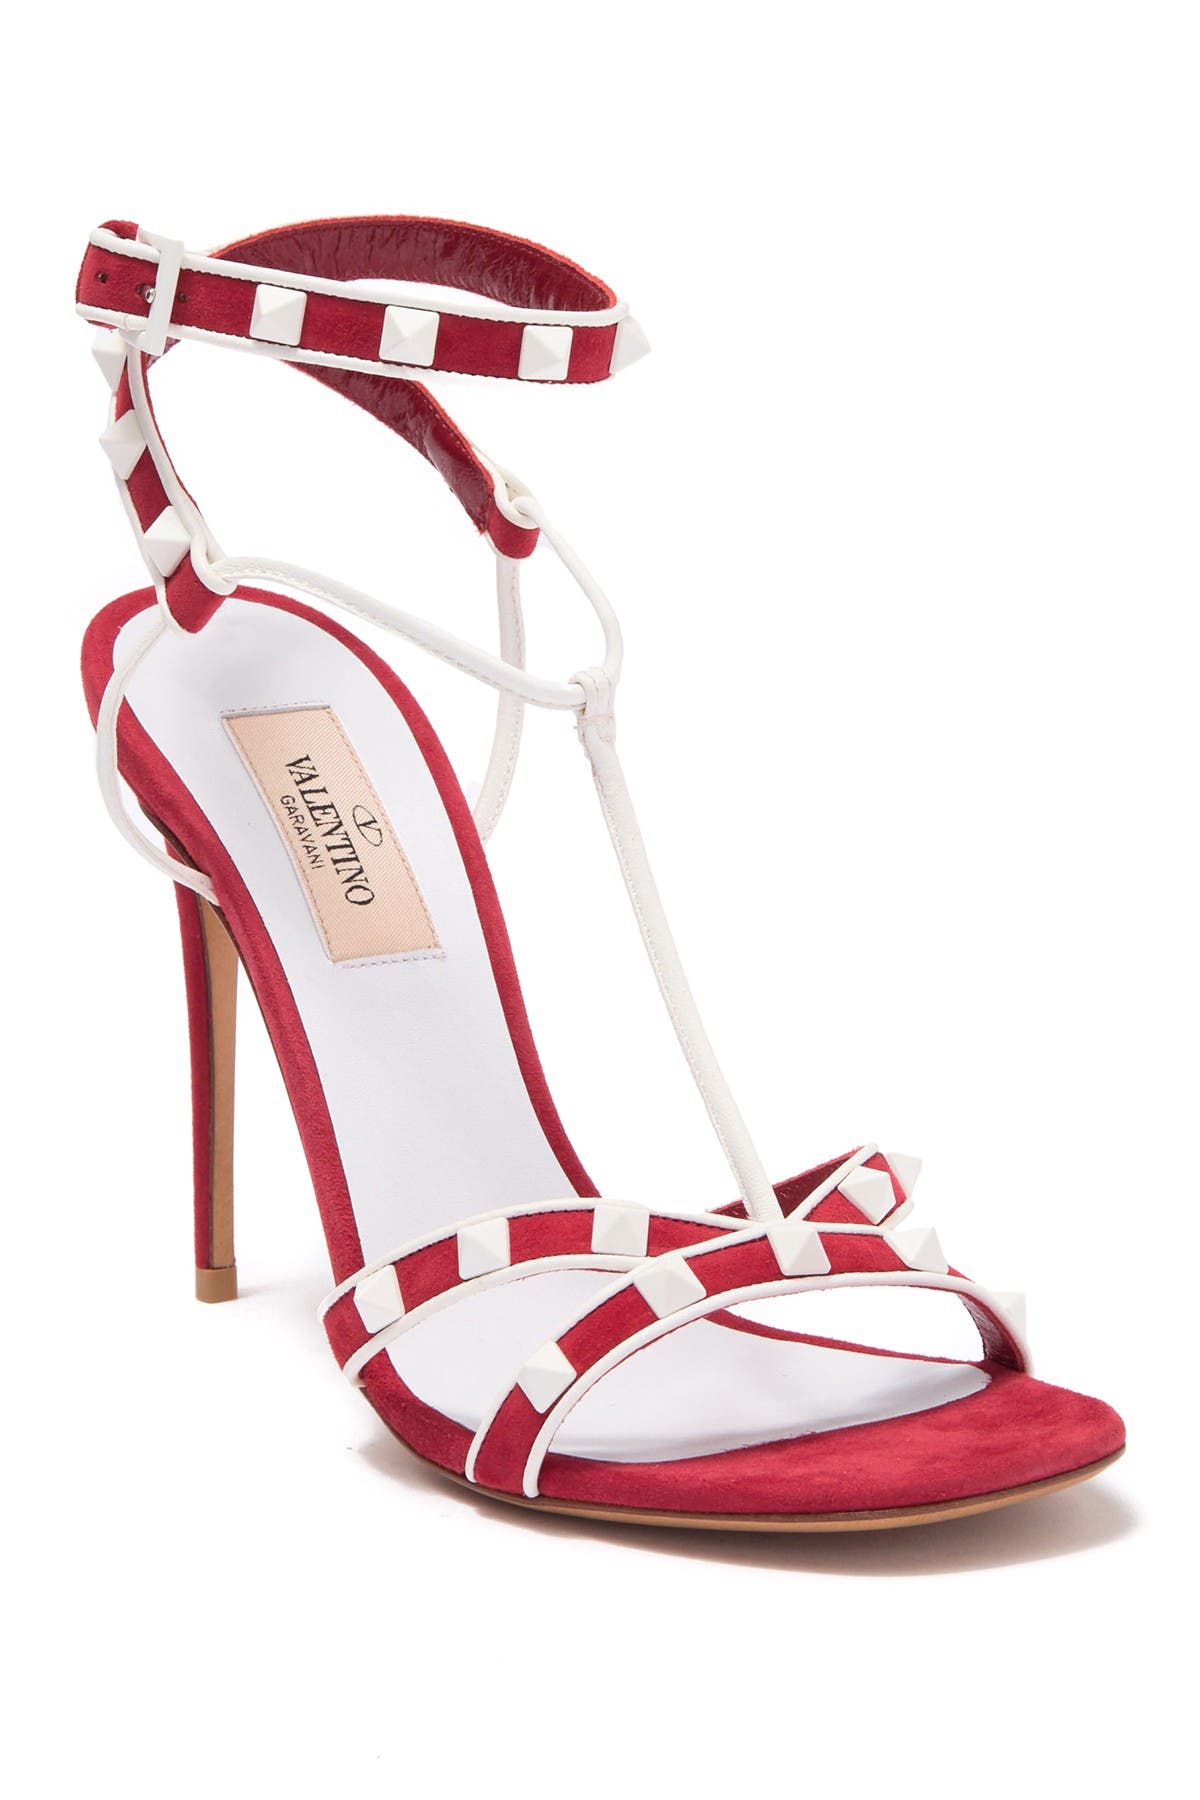 valentino strap rockstud stiletto heels